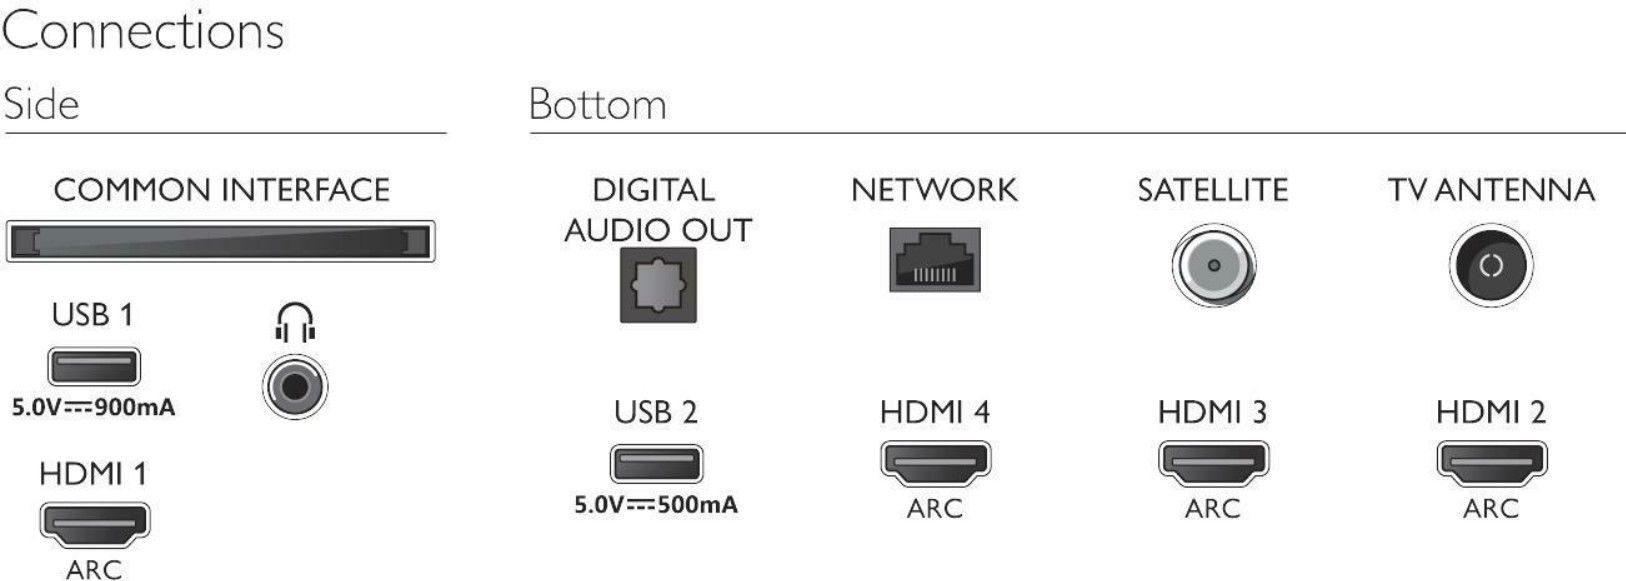 Philips 43PUS9235   43 Zoll UHD Ambilight smart TV für 539,10€ (statt 575€)